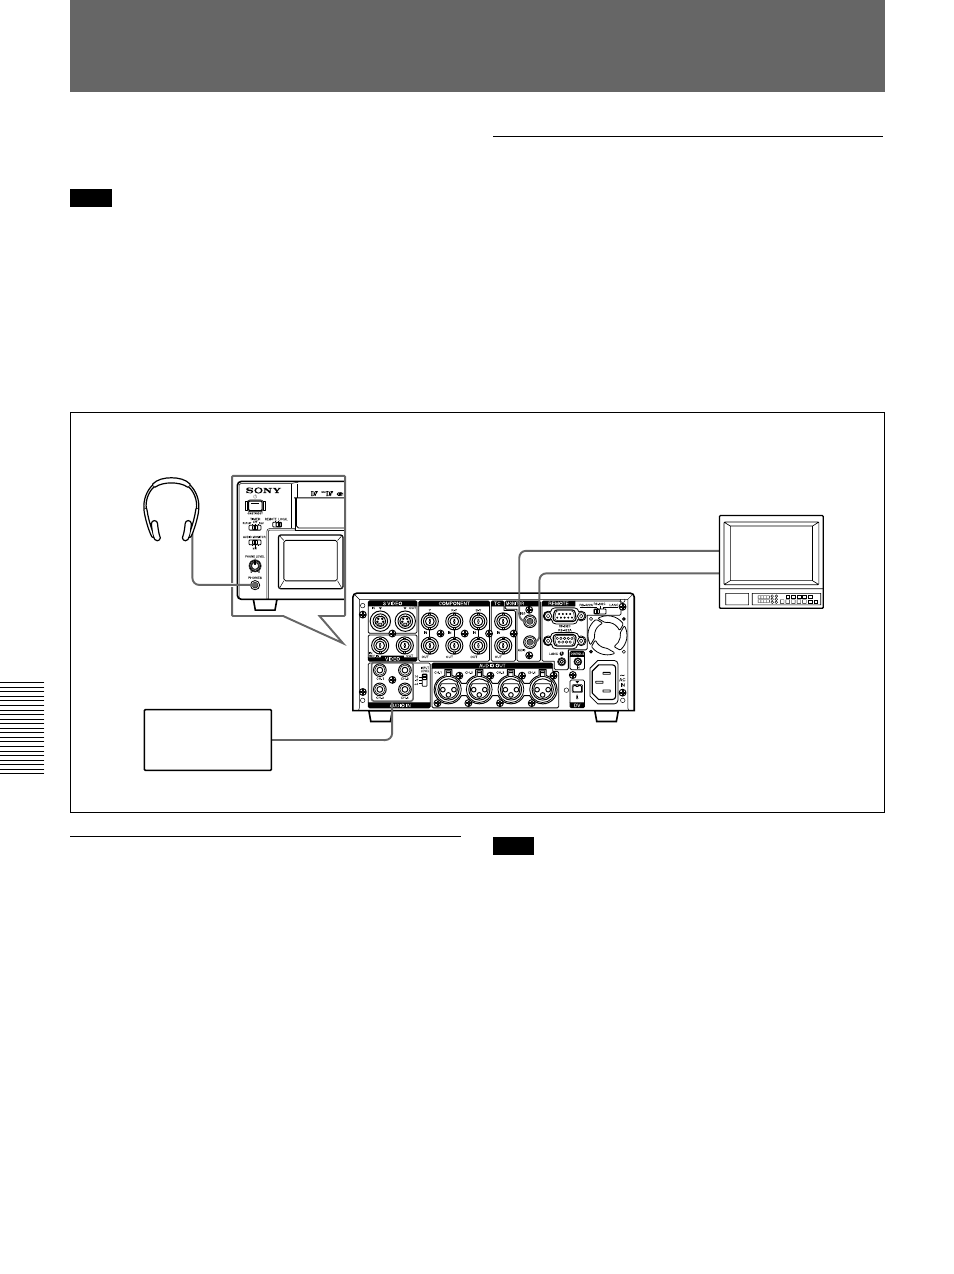 Audio dubbing, Connection of external devices, Selecting the input channels for audio dubbing | Sony DSR-45/45P Manuel d'utilisation | Page 74 / 220